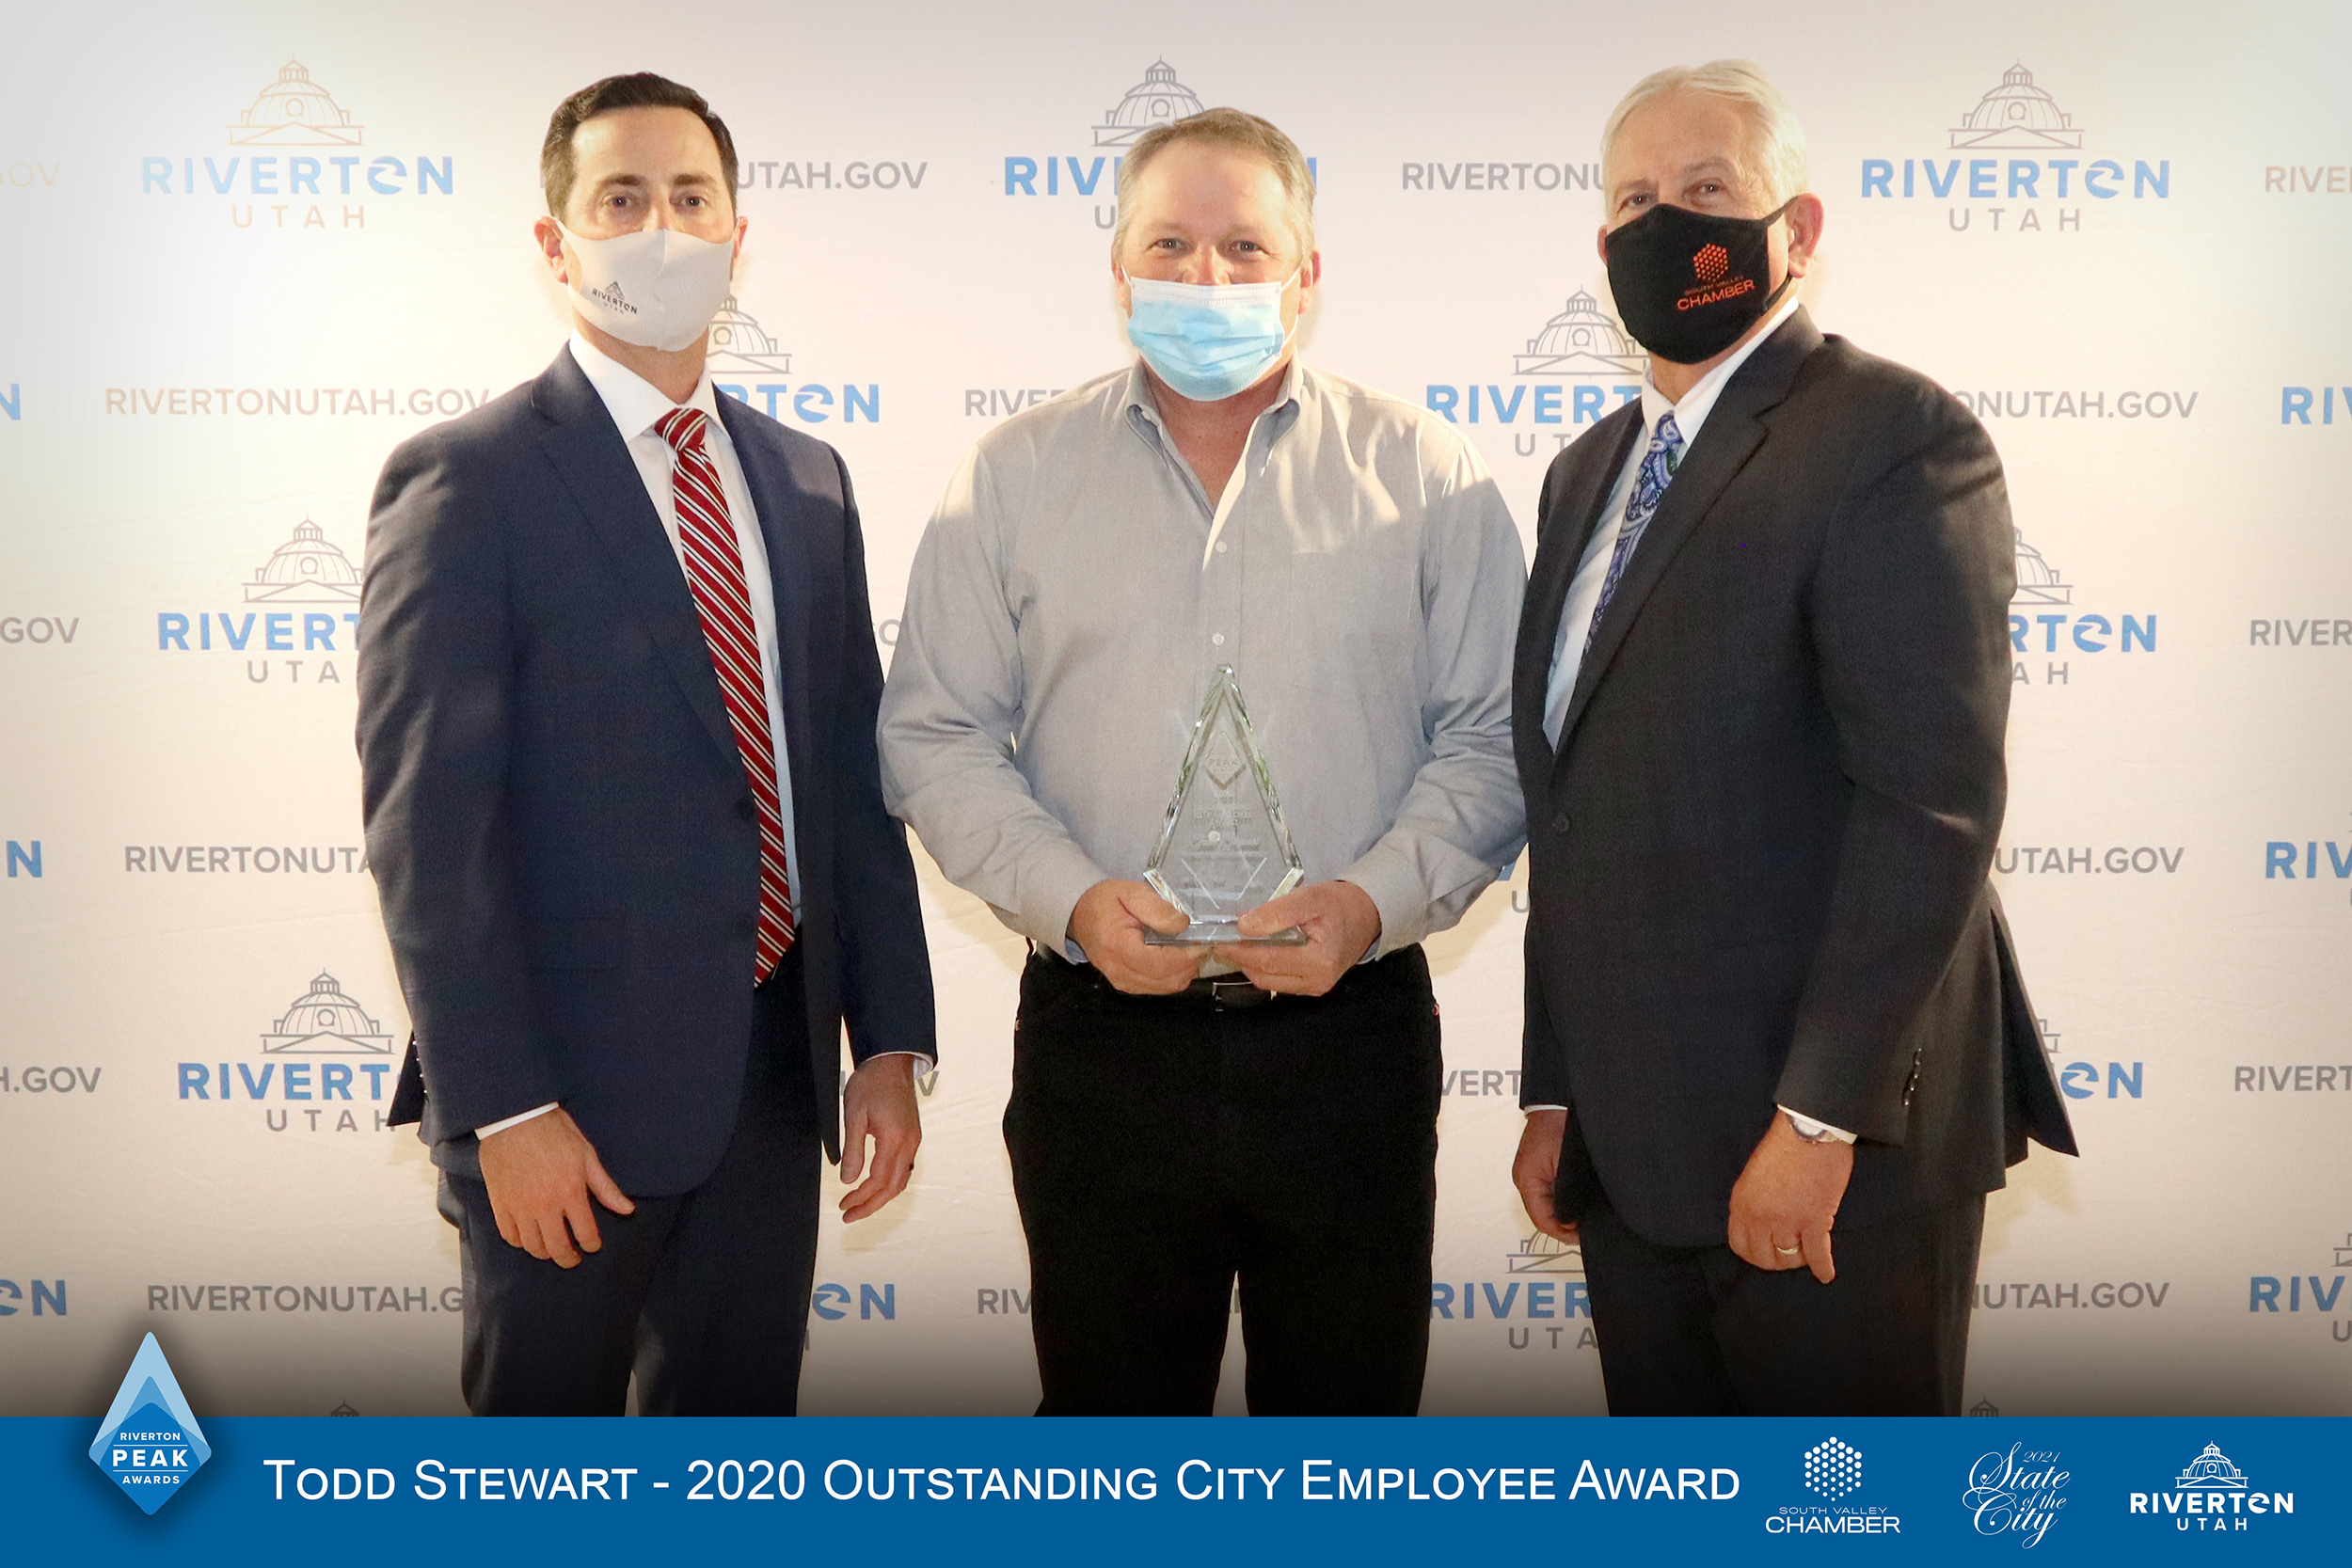 Outstanding City Employee Award - Todd Stewart